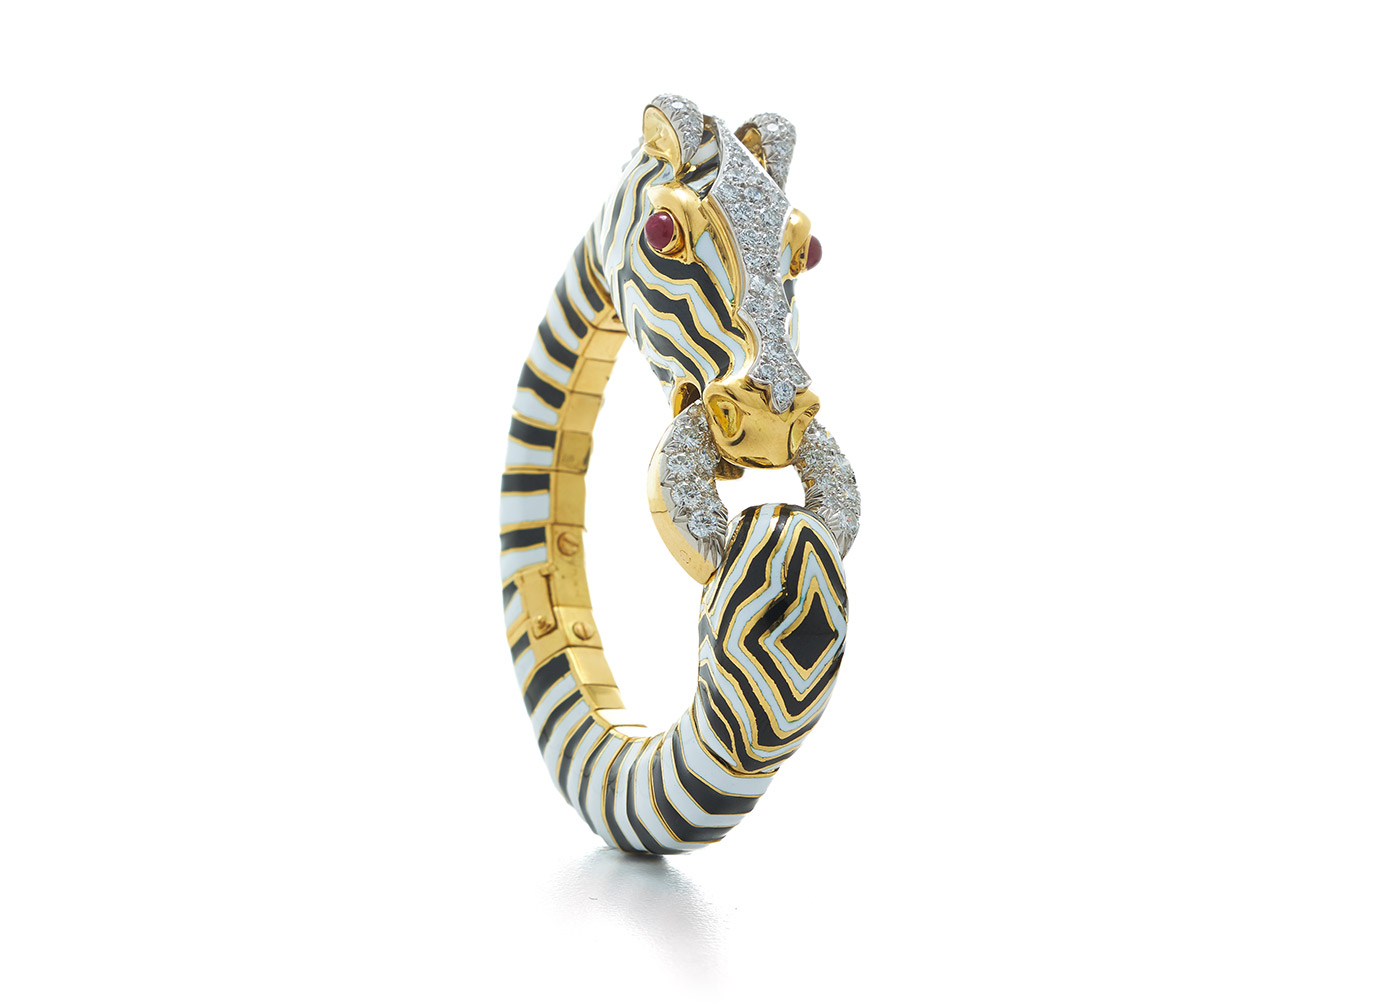 David Webb 'Zebra' bracelet with cabochon rubies, brilliant cut diamonds and enamel in 18k gold and platinum